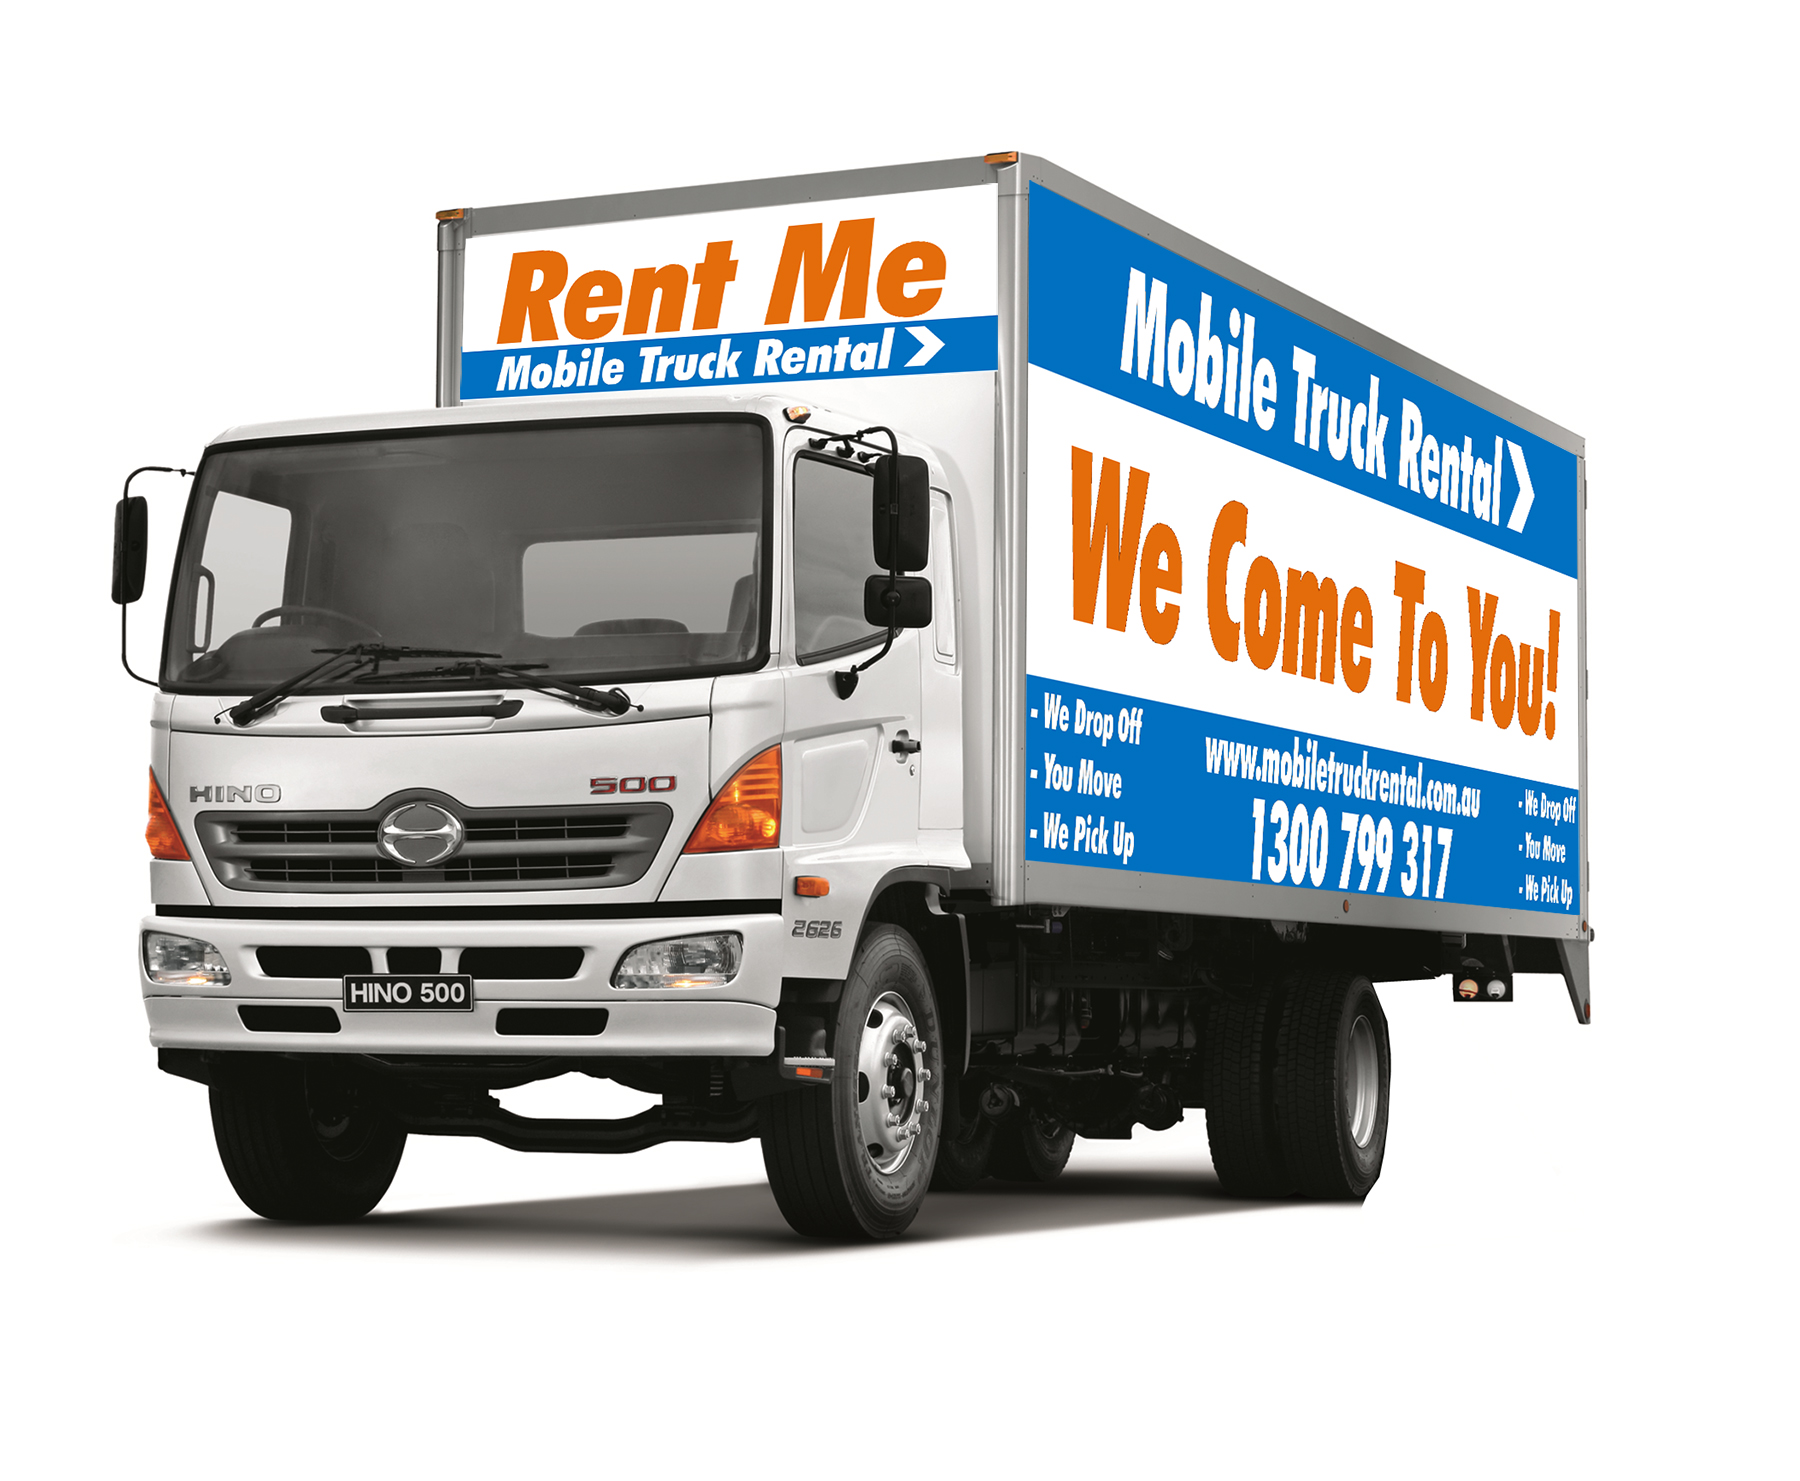 Mobile Truck Rental